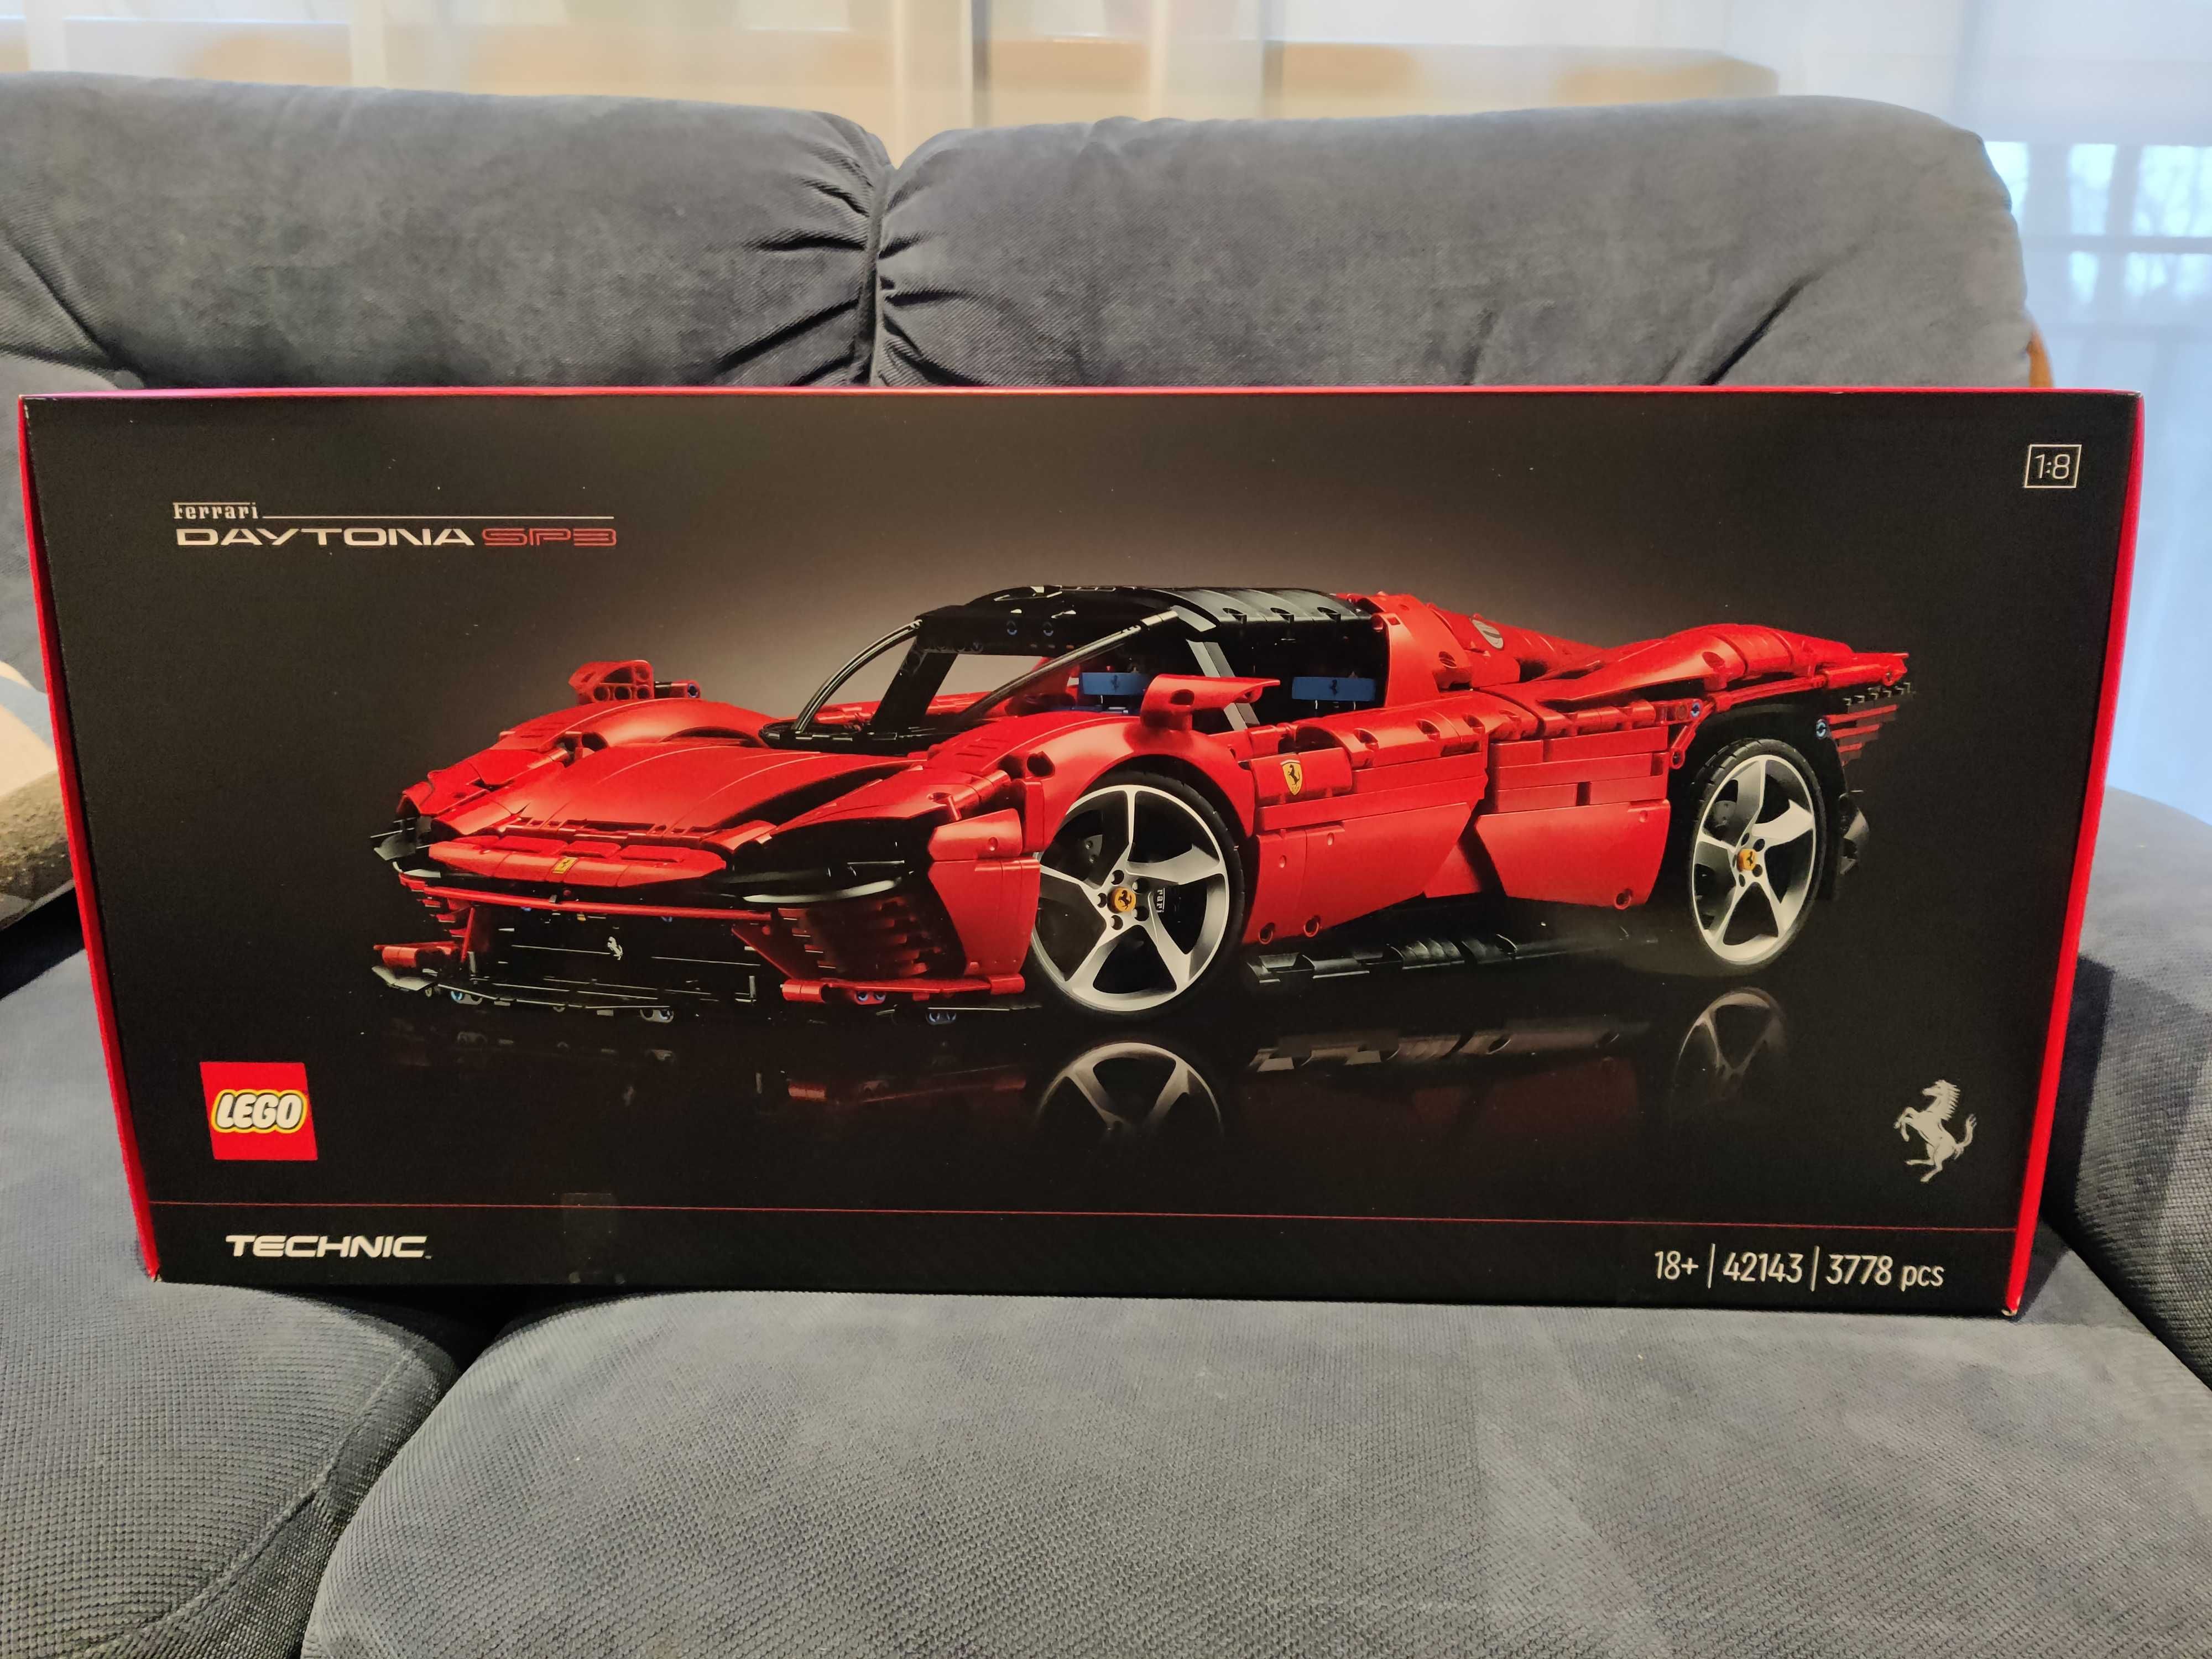 Ferrari Daytona SP3 42143 LEGO Technic